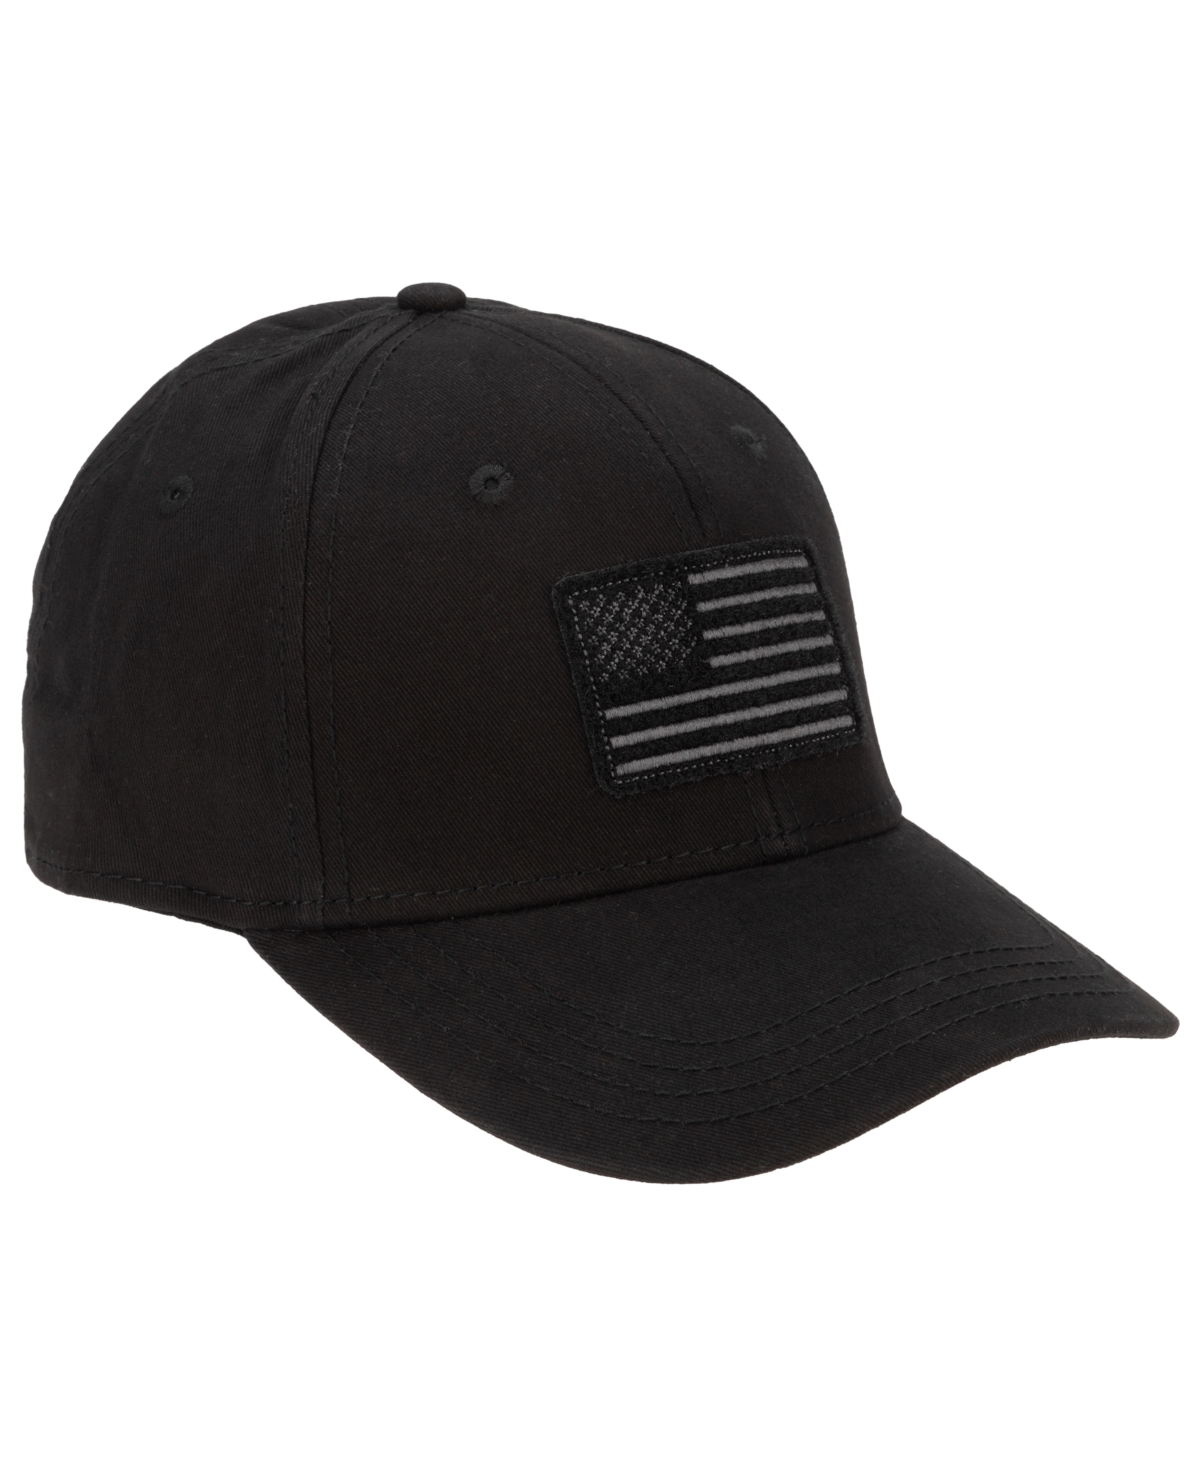 Men's American Flag Baseball Adjustable Cap - Black